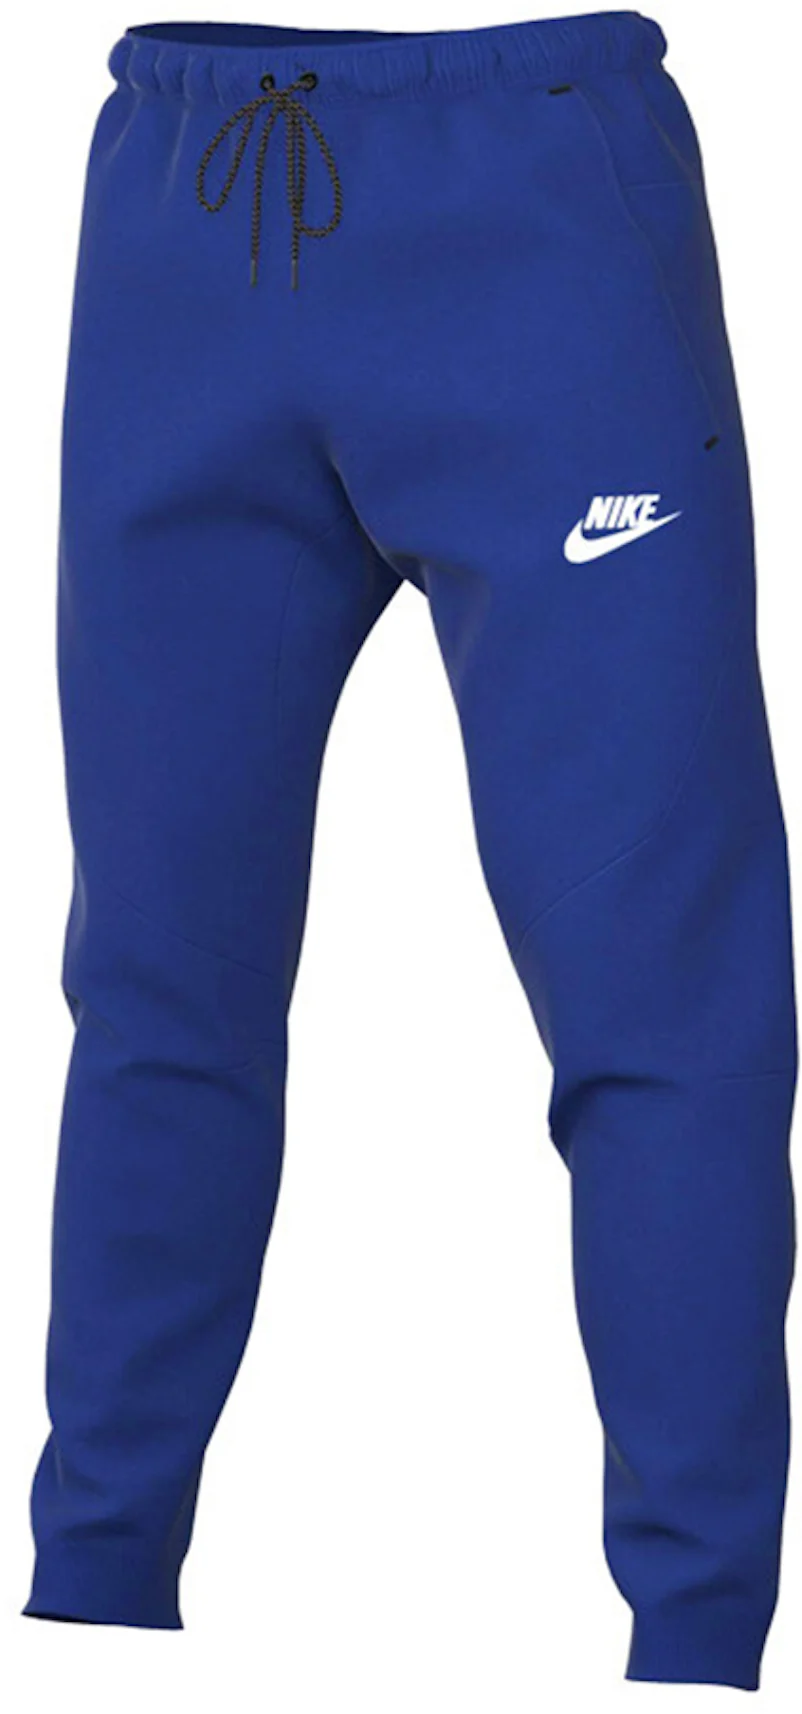 Buy Men's Nike Blue Joggers Online